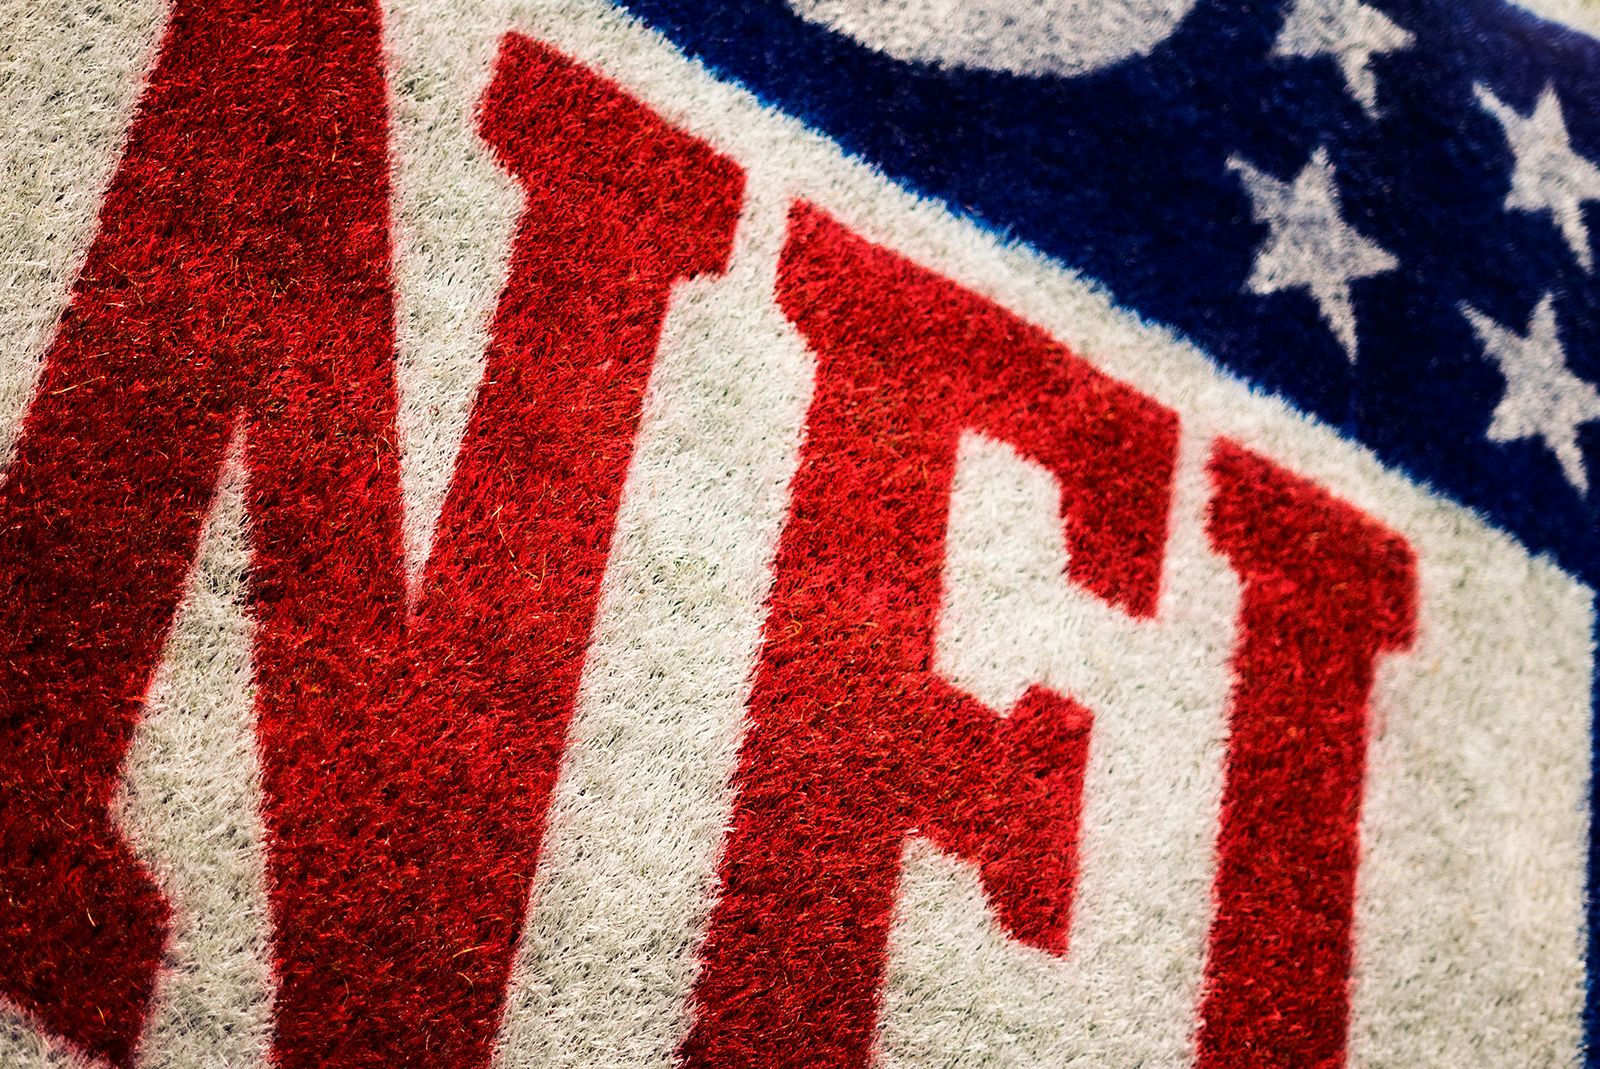 Hulus live TV service adds NFL RedZone ahead of 2021 season